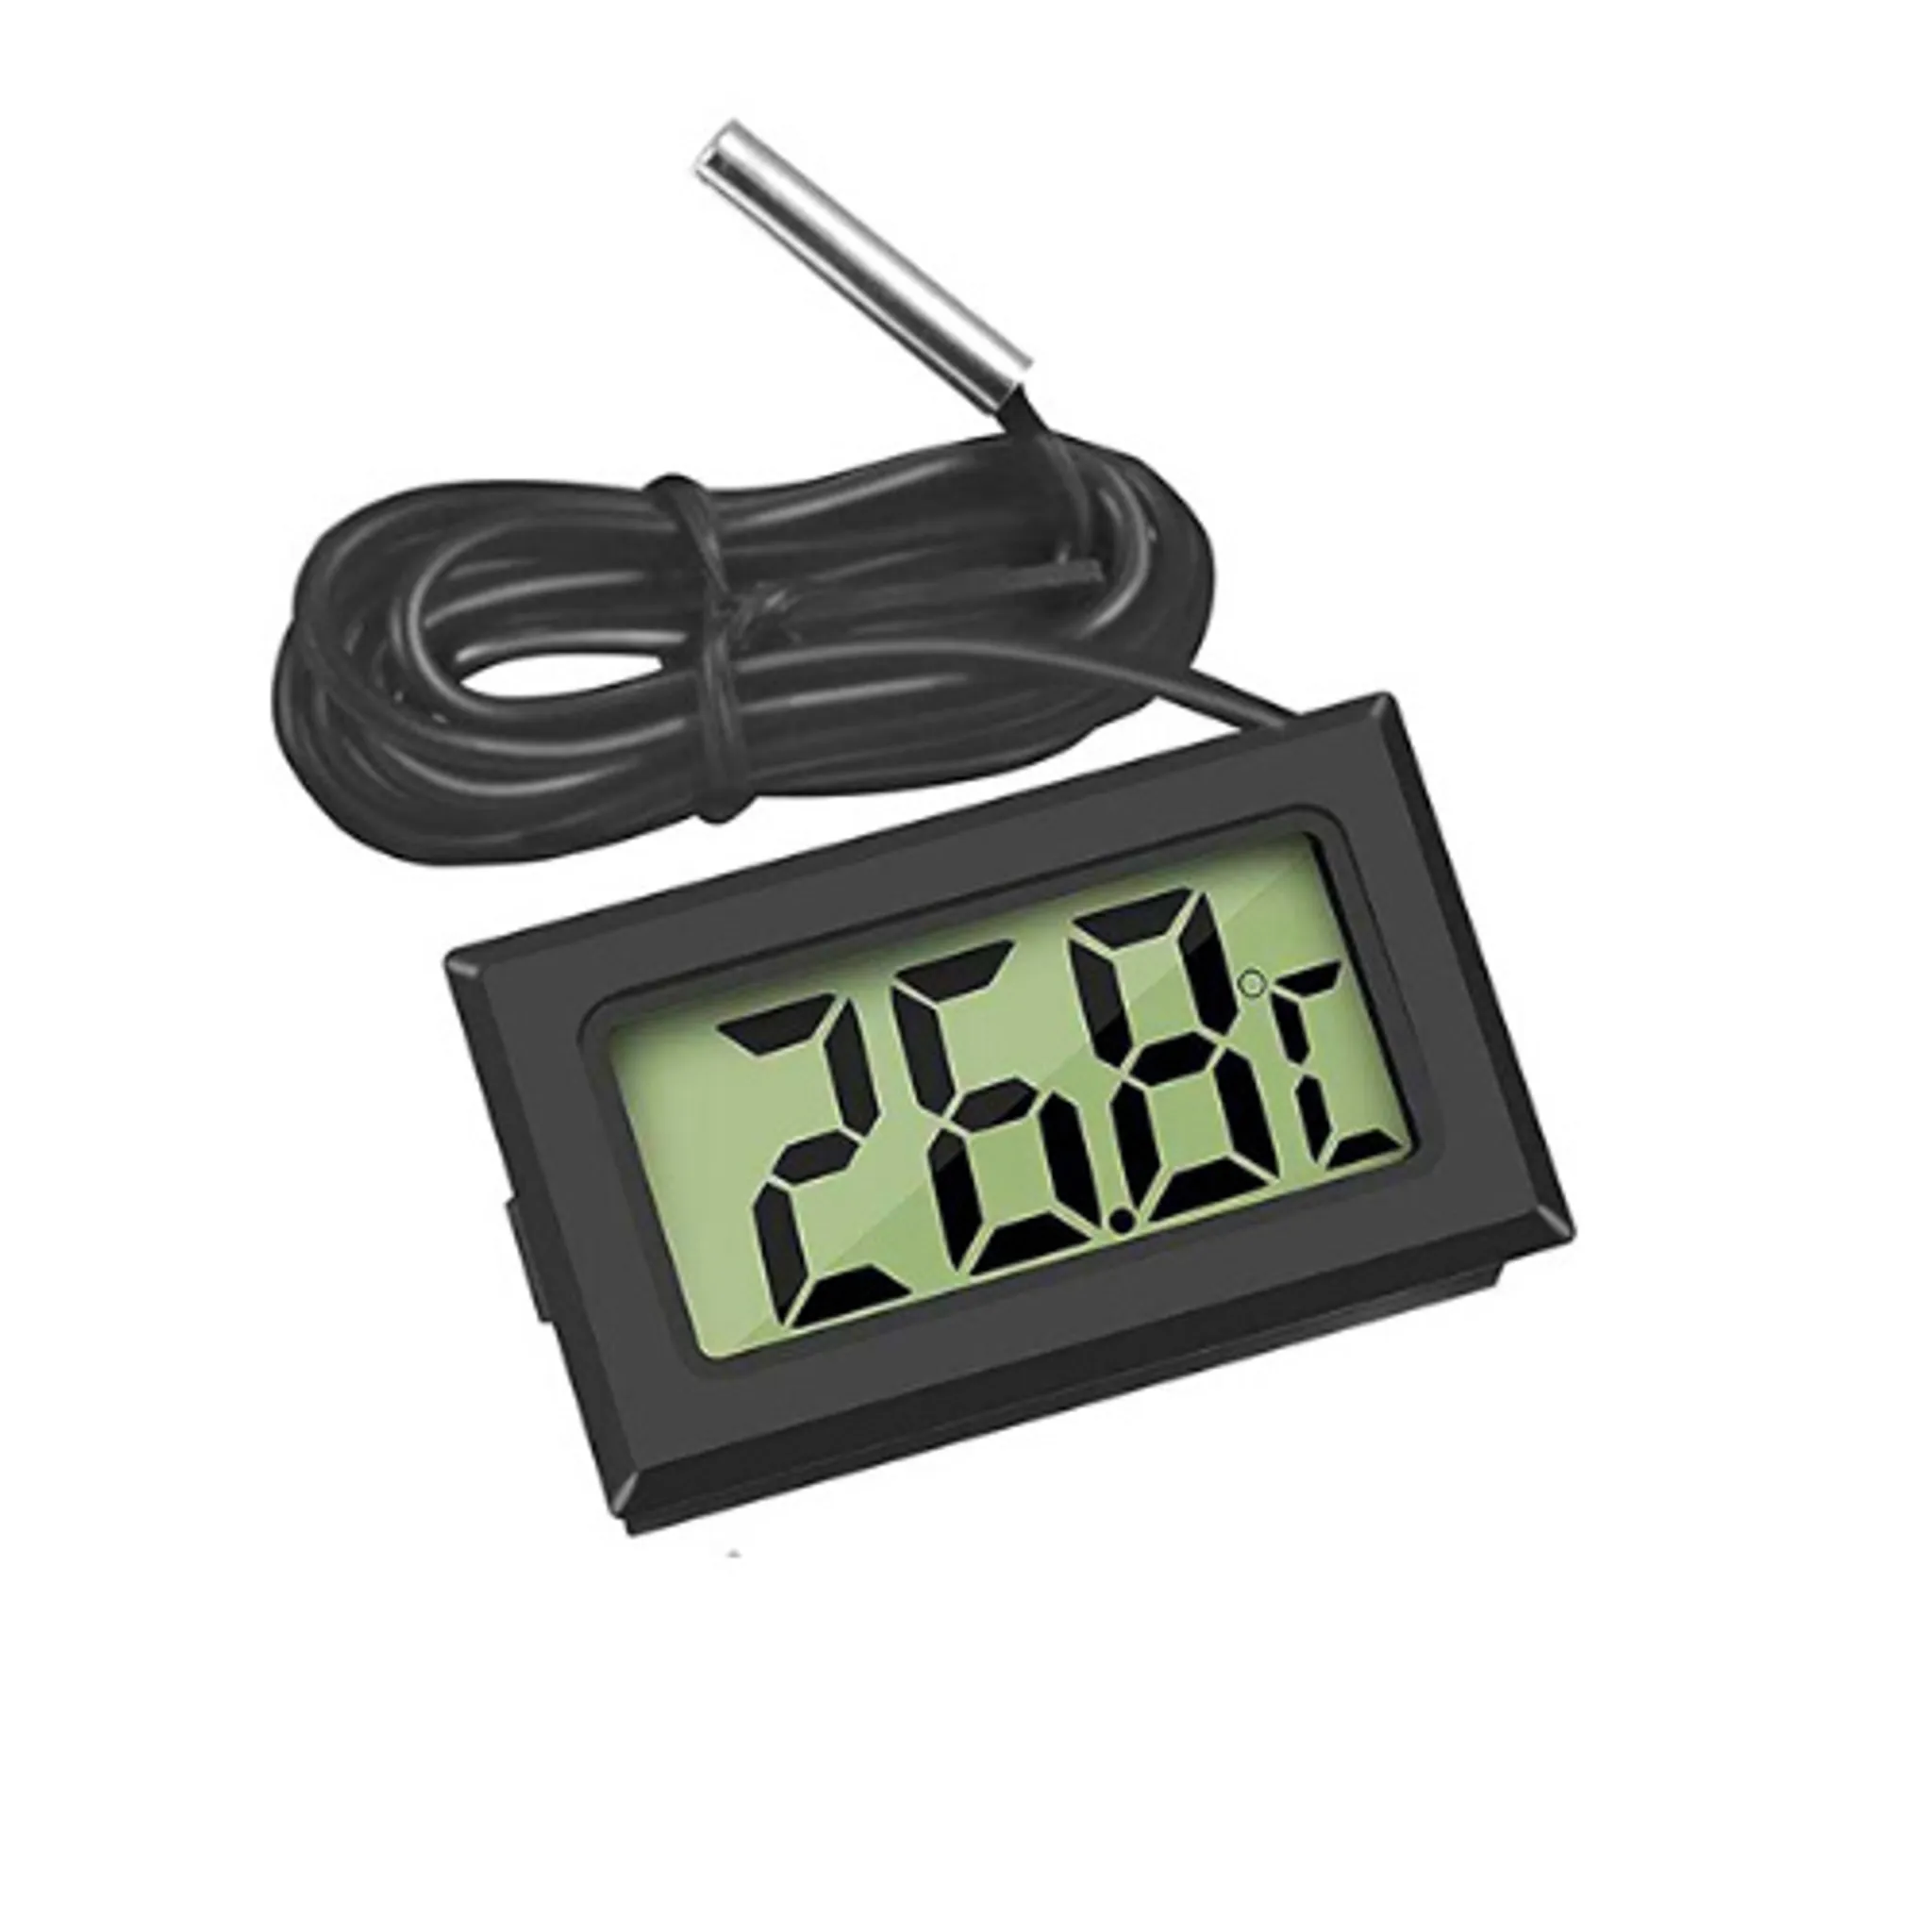 Buy VOLTCRAFT MINI IR 10 IR thermometer Display (thermometer) 1:1